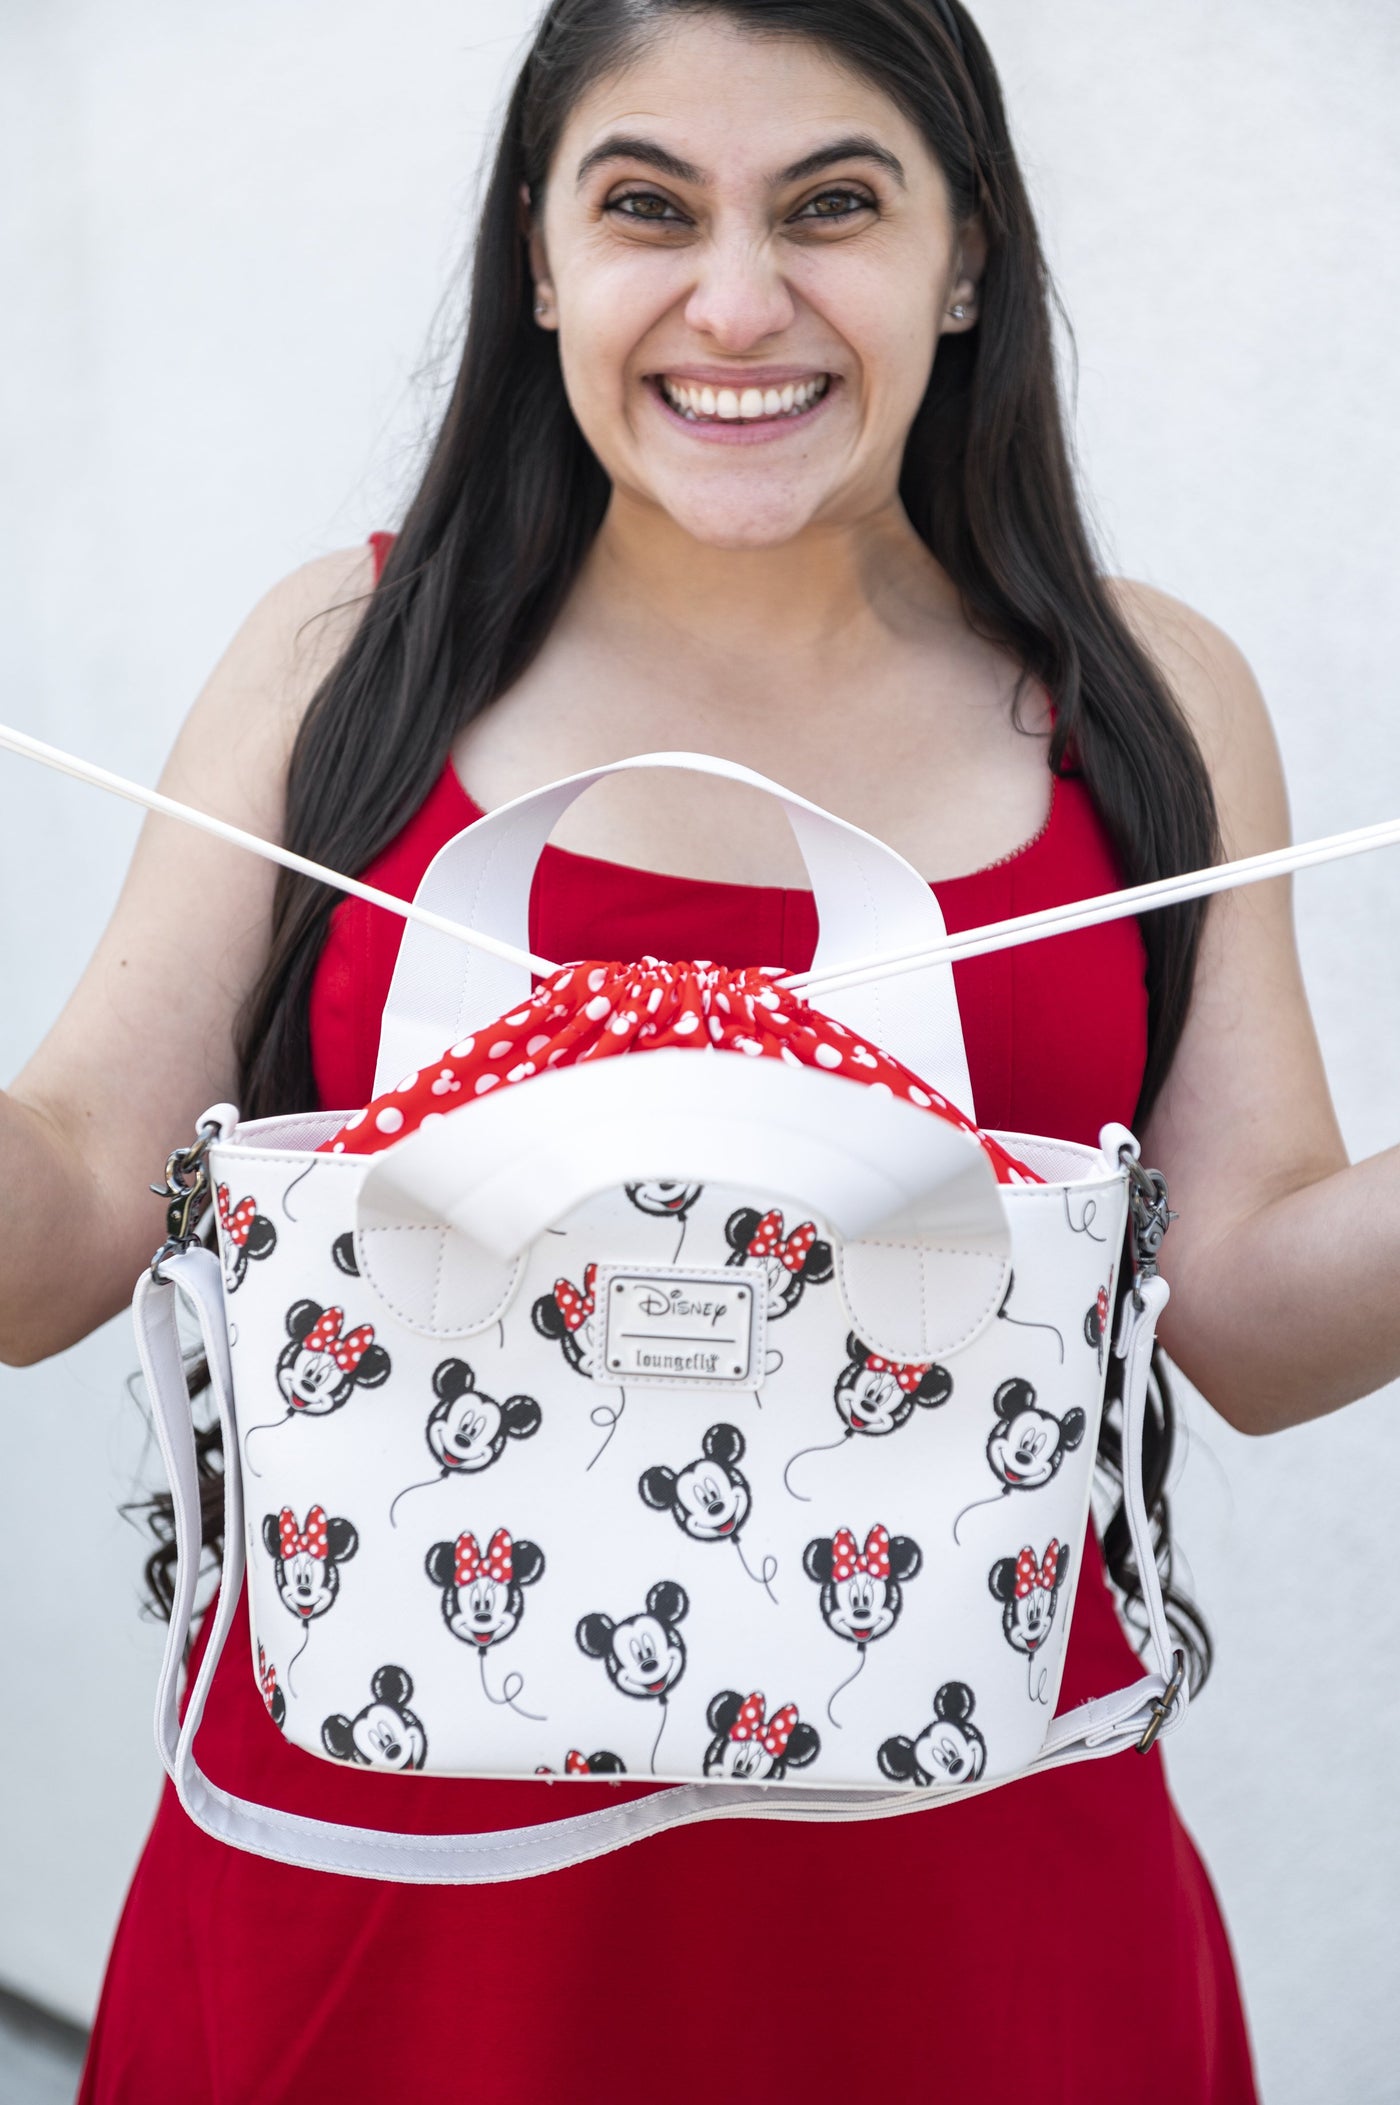 Loungefly Disney Mickey & Minnie Mouse Balloons Allover Print Convertible Handbag